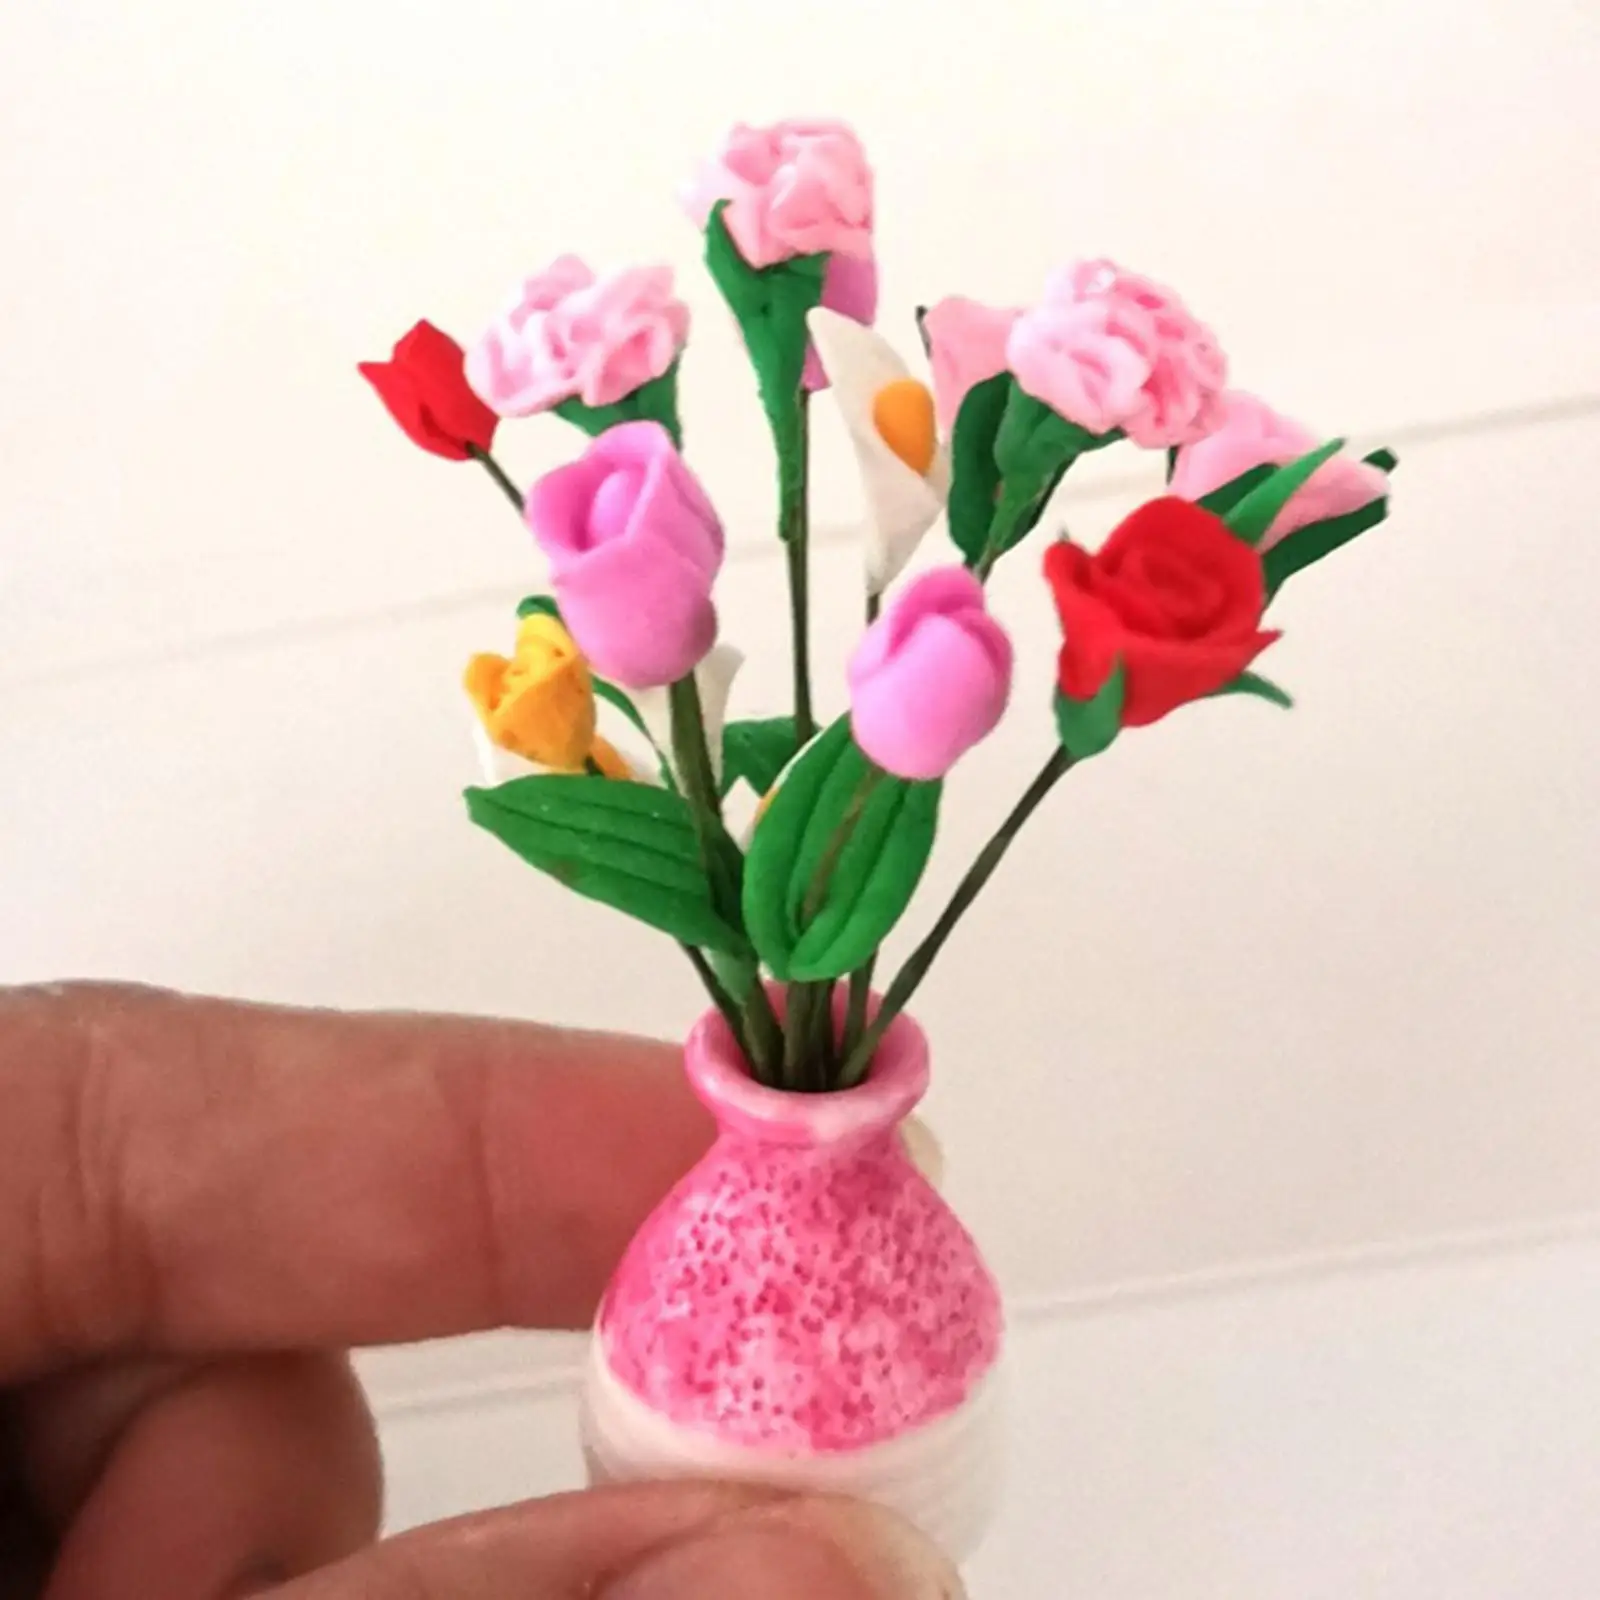 Miniature Flower Pretend Play Tiny Bonsai Model 1:12 Scale Dollhouse Flowes for Fairy Garden Dollhouse Accessories Diorama Decor